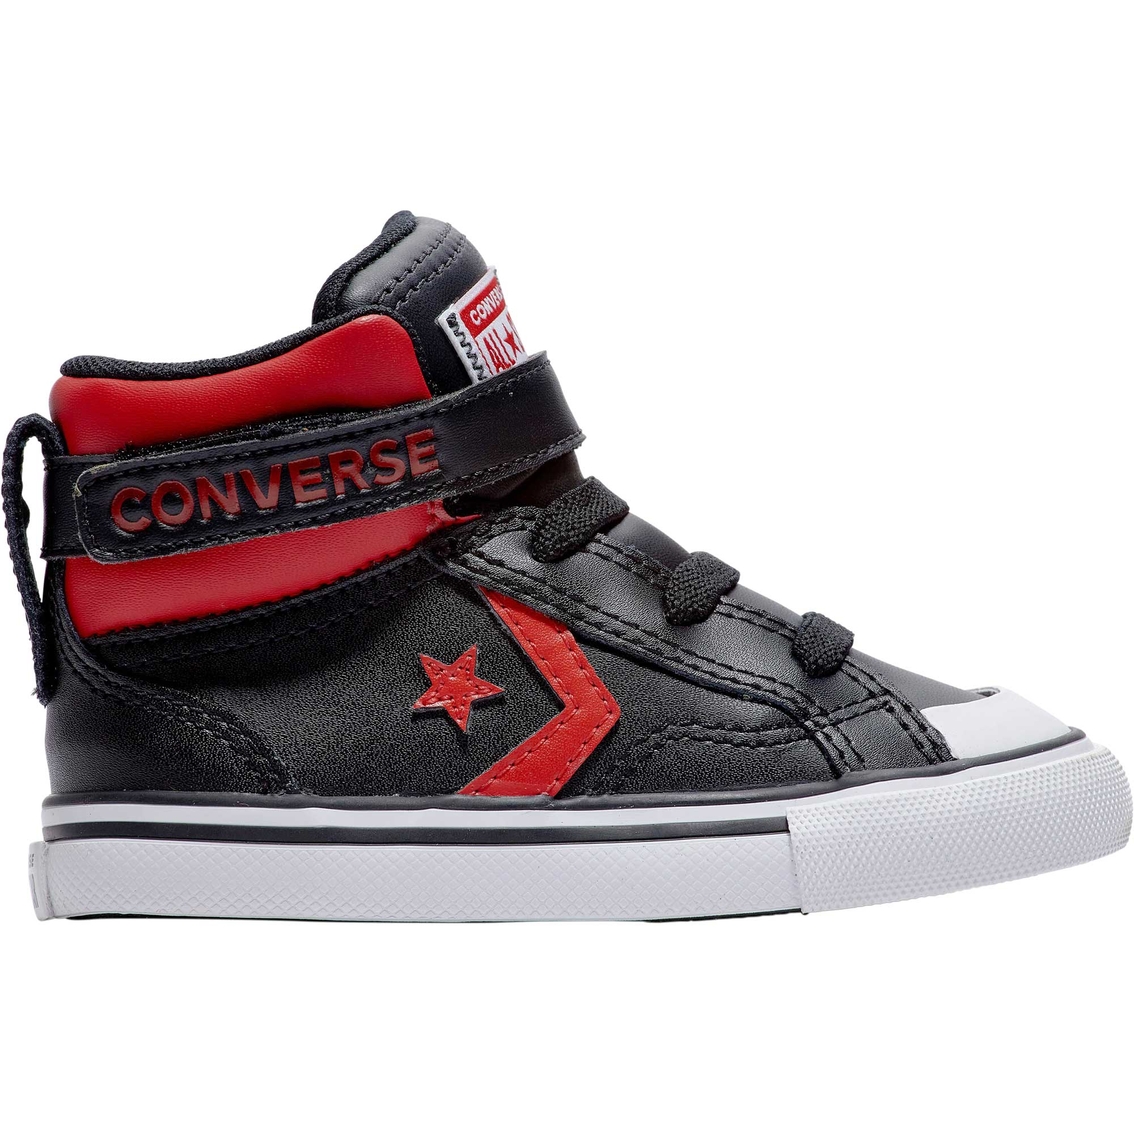 Converse Infant Boys Sneakers The Exchange Shop Shoes Pro | Varsity | Blaze Color Strap High Top 